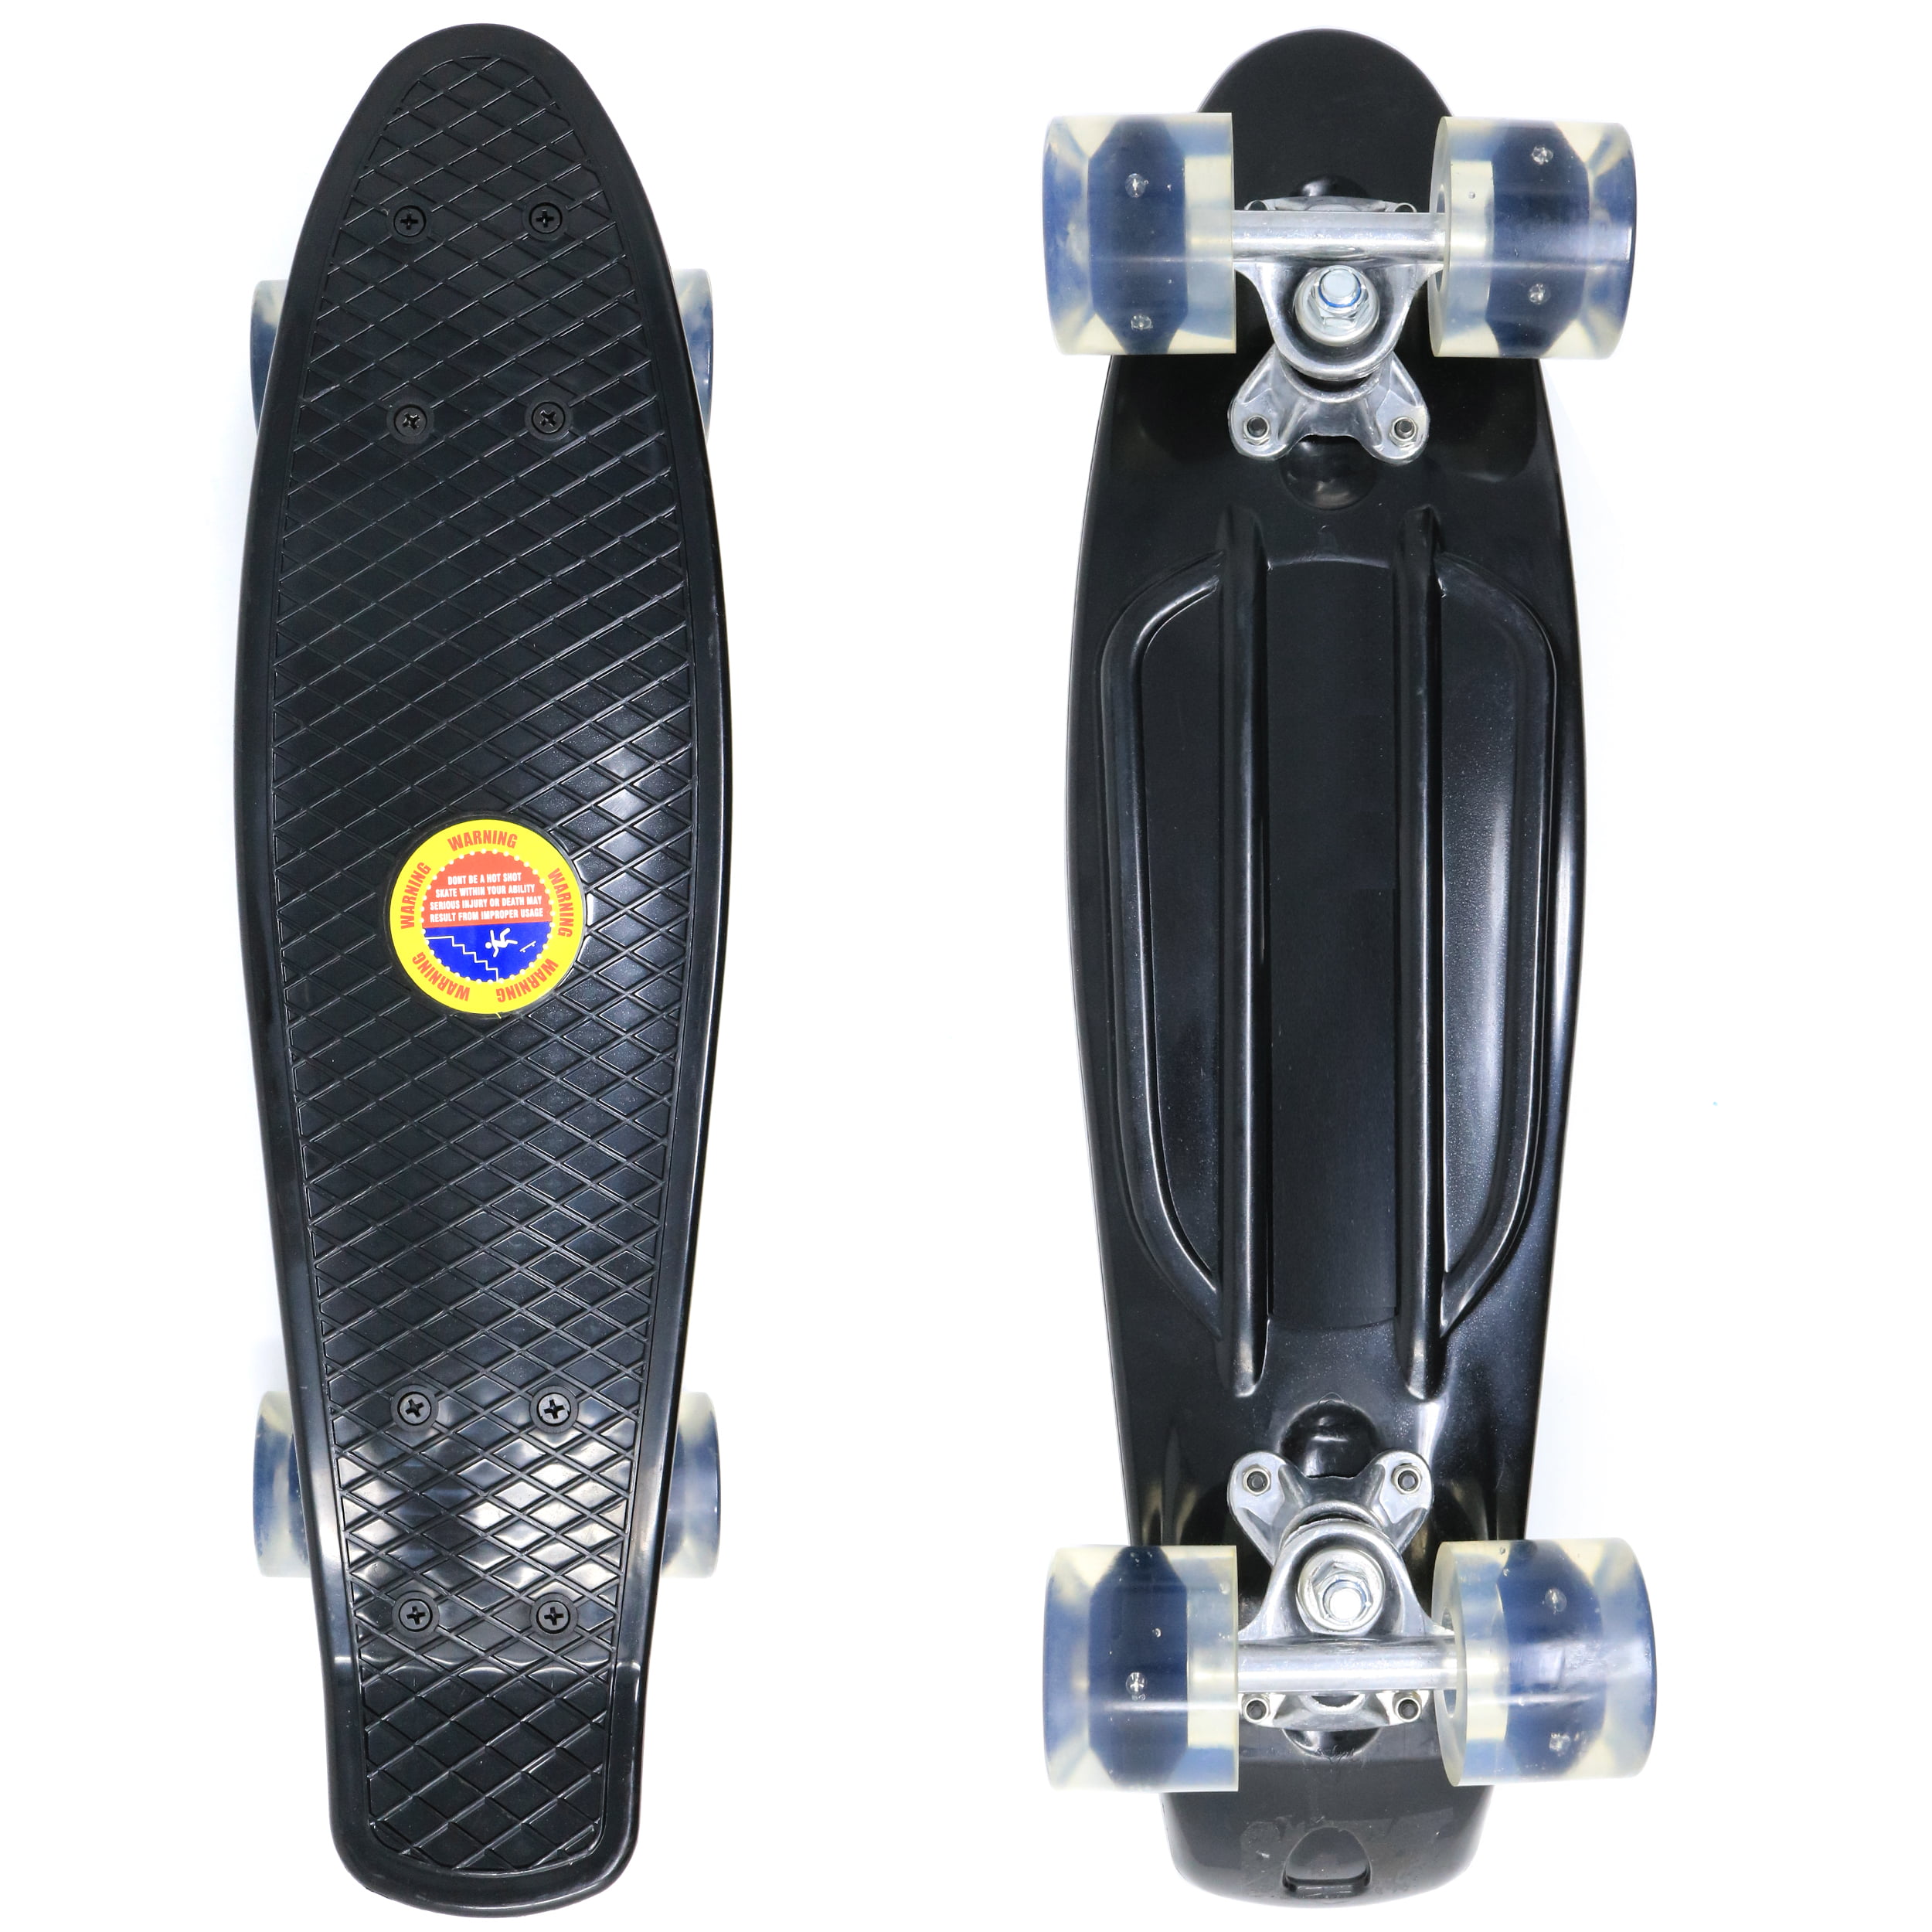 ® retro skateboard completamente Street minicruiser Board vintage Blues pro. tec